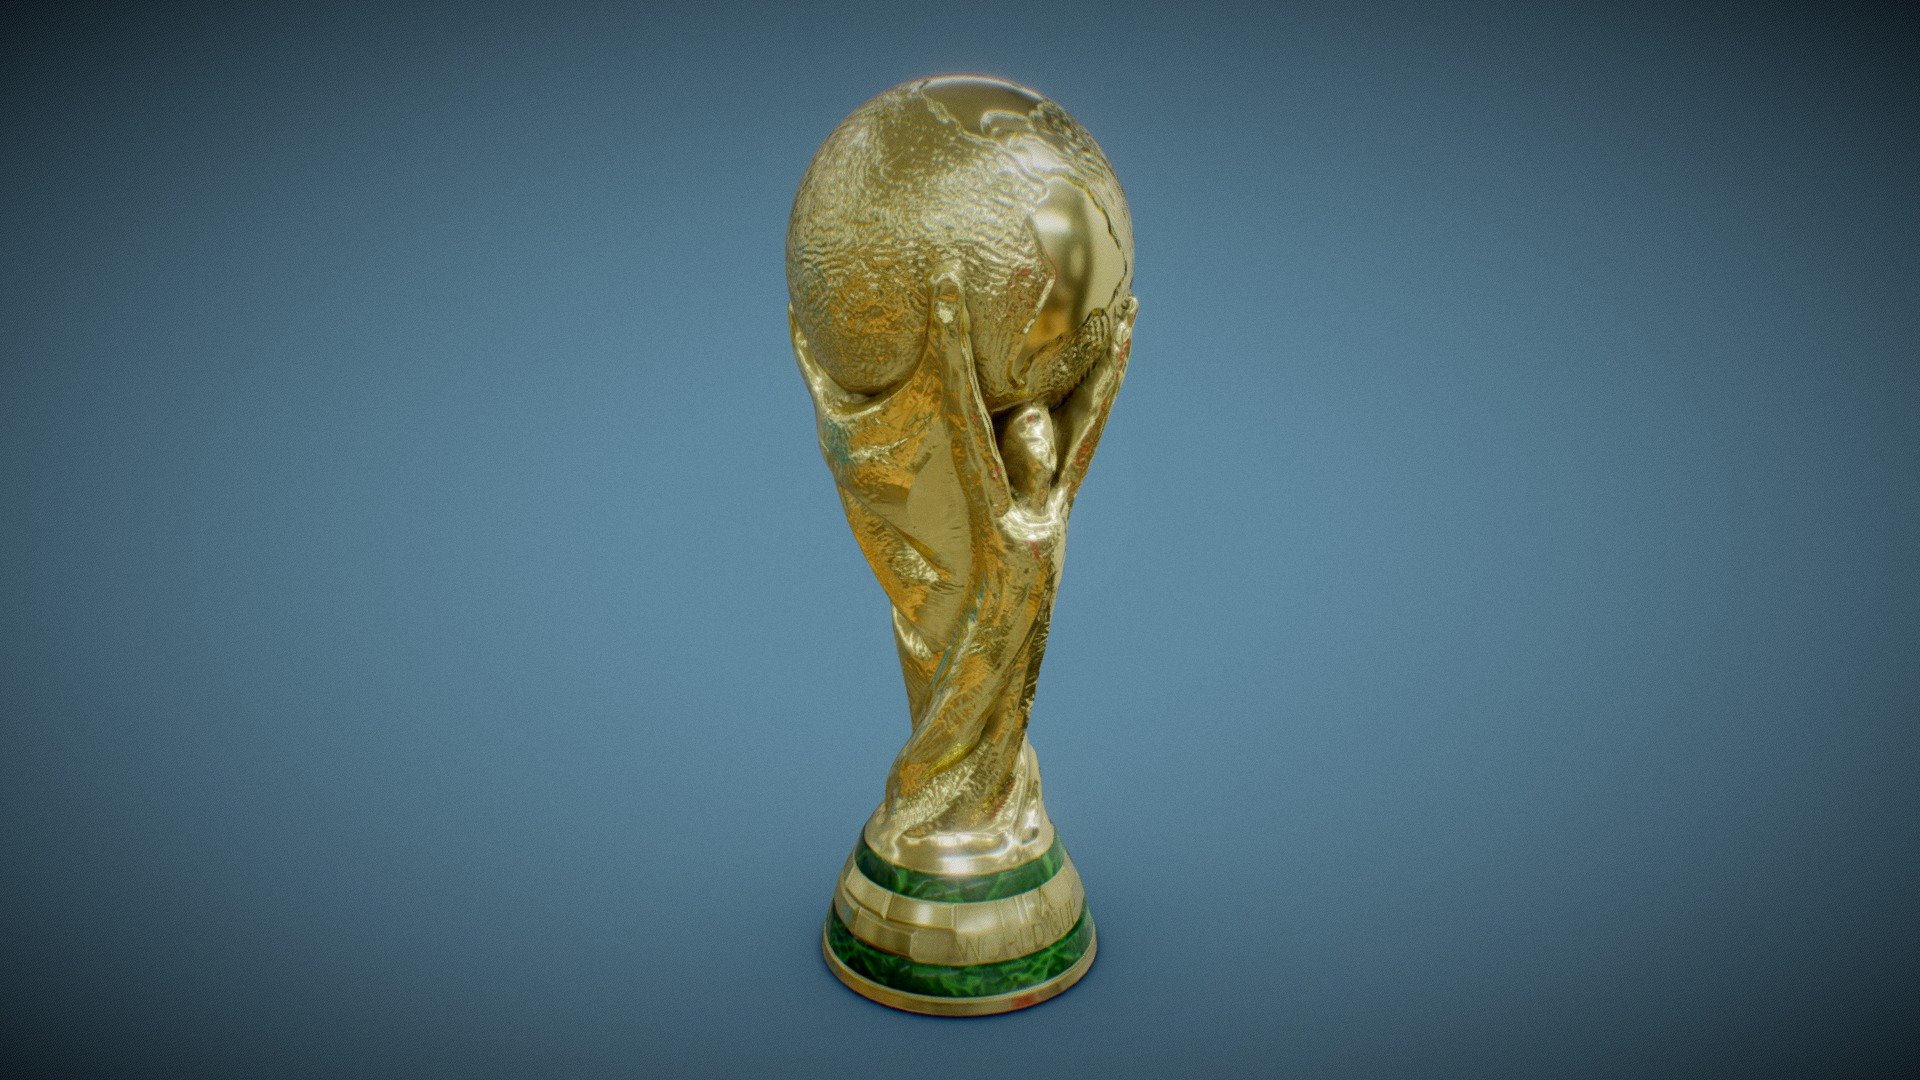 fifa world cup trophy sketch